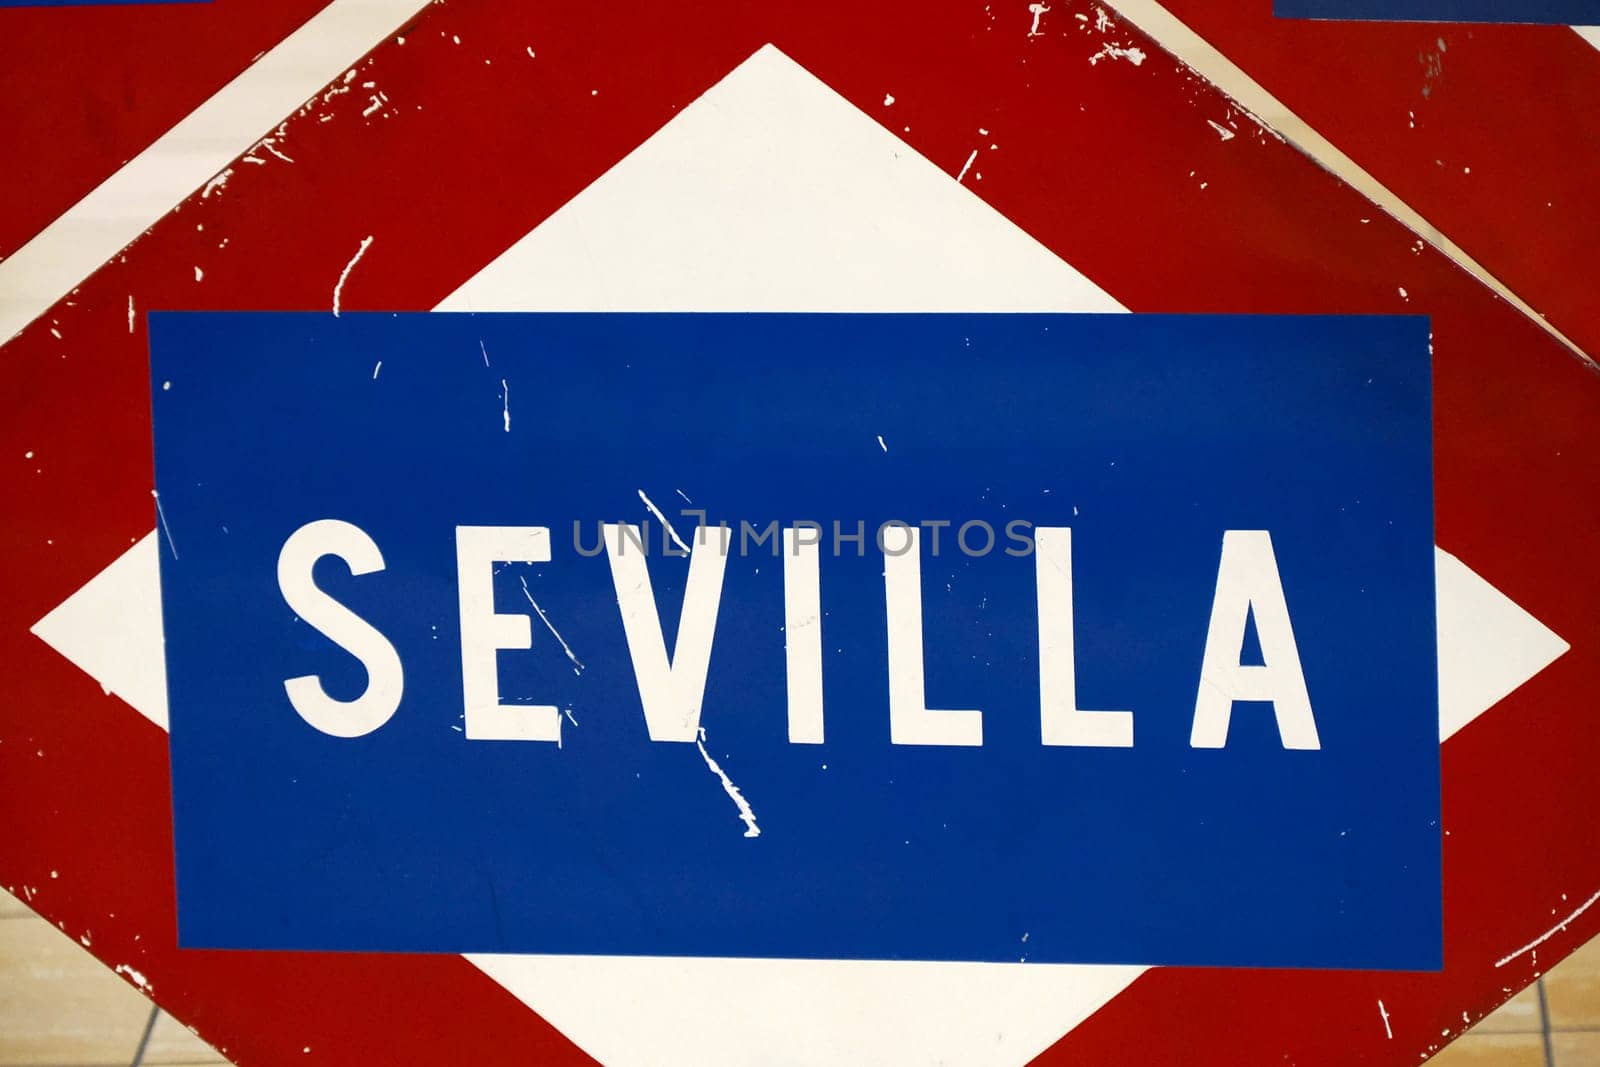 Sevilla Metro Station Sign in Madrid Spain by AndreaIzzotti